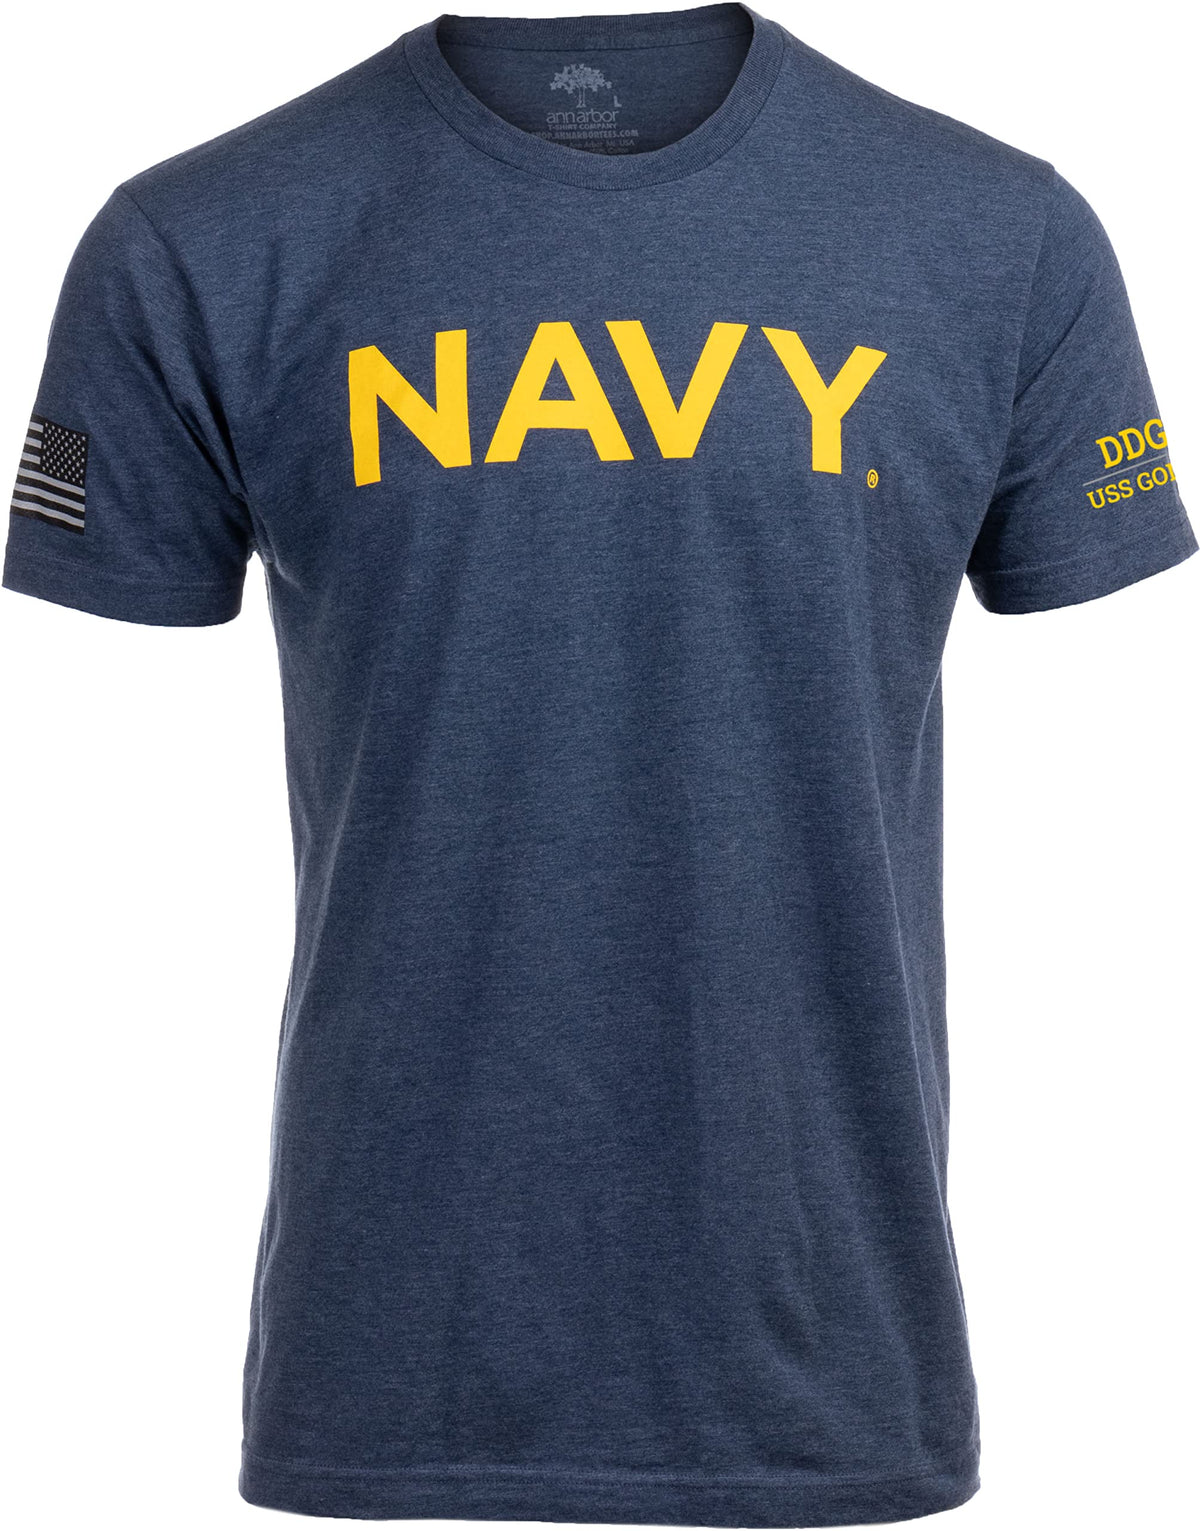 USS Gonzalez, DDG-66 | U.S. Navy Sailor Veteran USN United States Naval T-shirt for Men Women